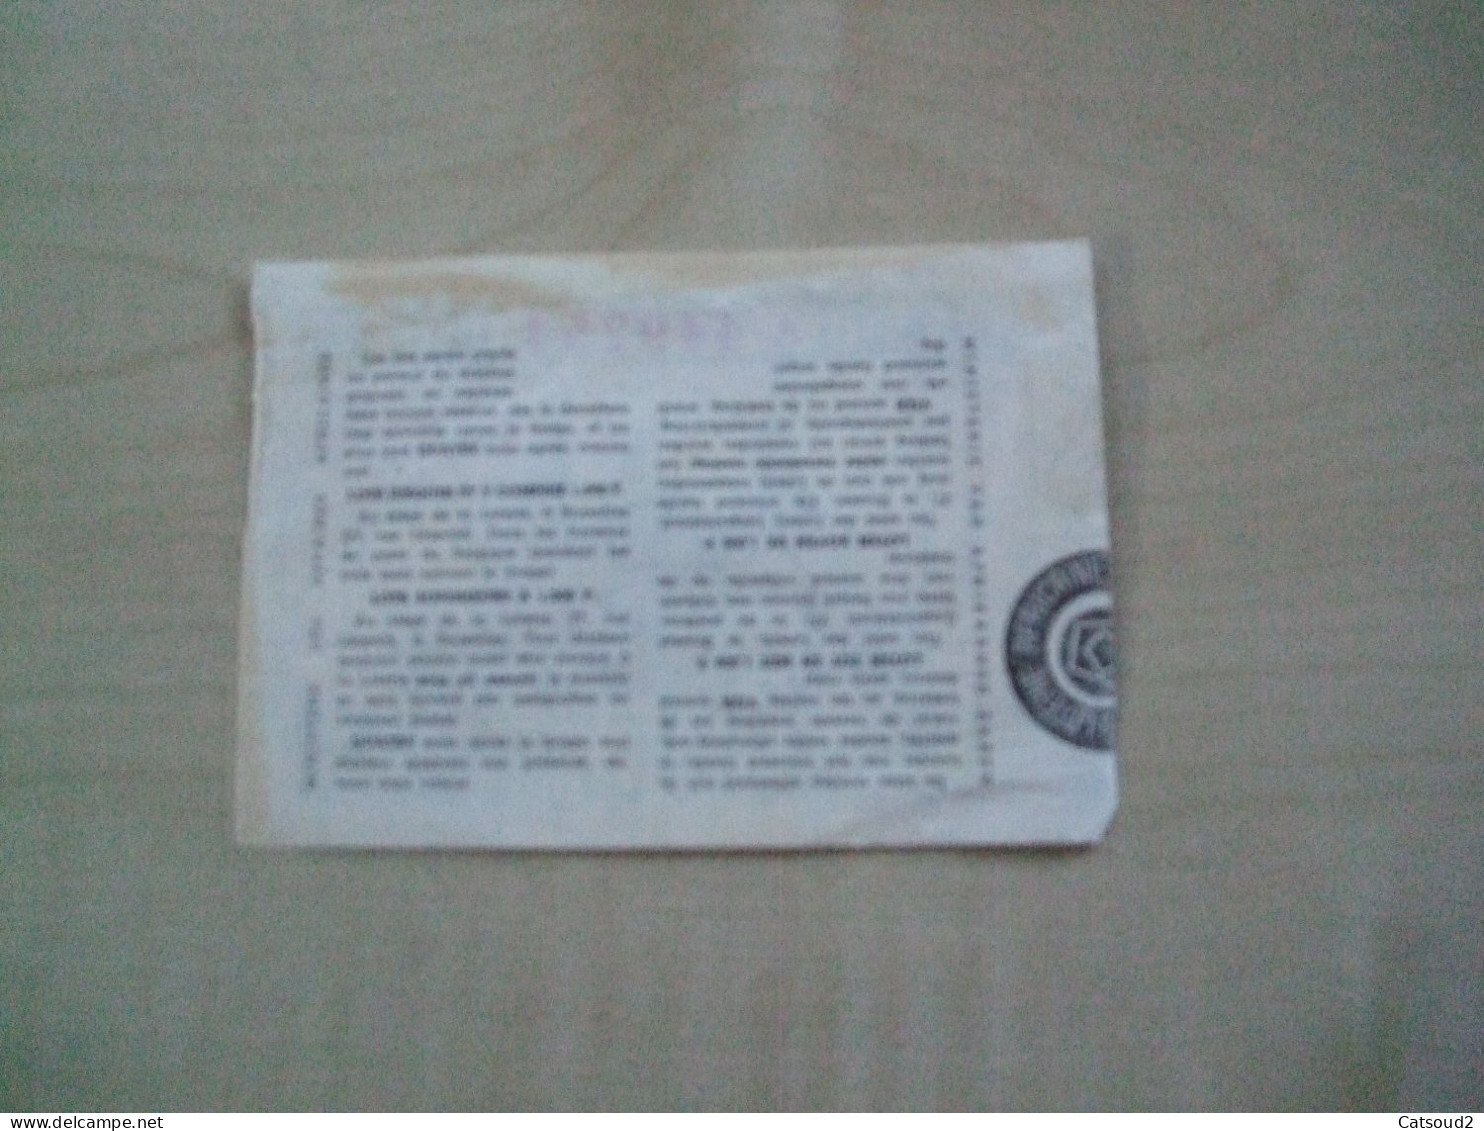 BILLET DE LOTERIE AFRICAINE 1961 - Lottery Tickets